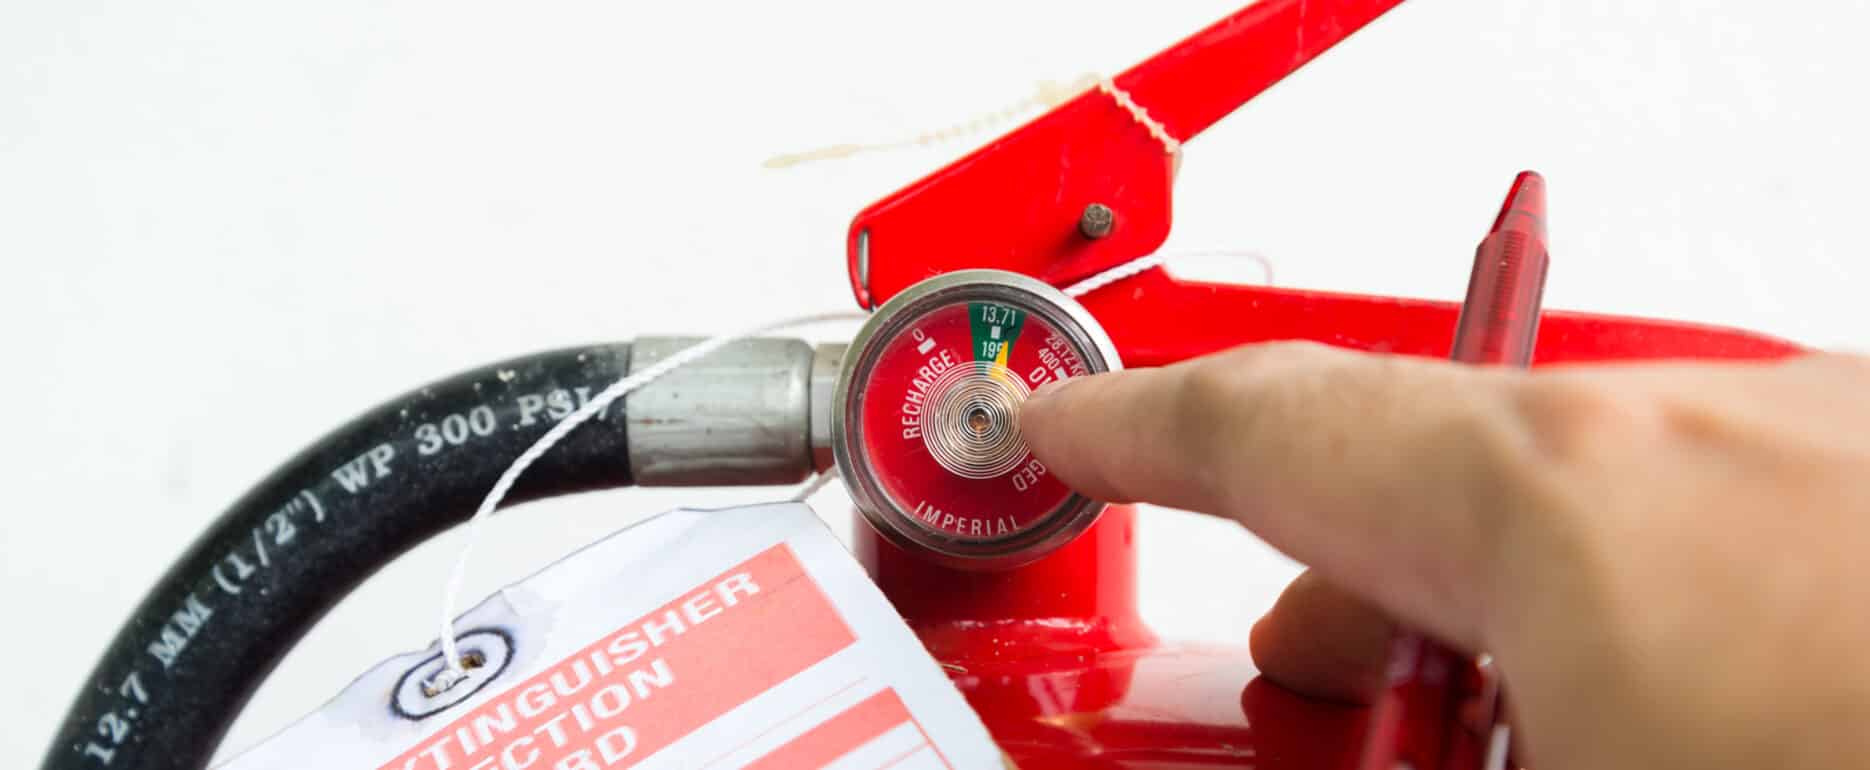 Fire extinguisher monthly check pressure gauge